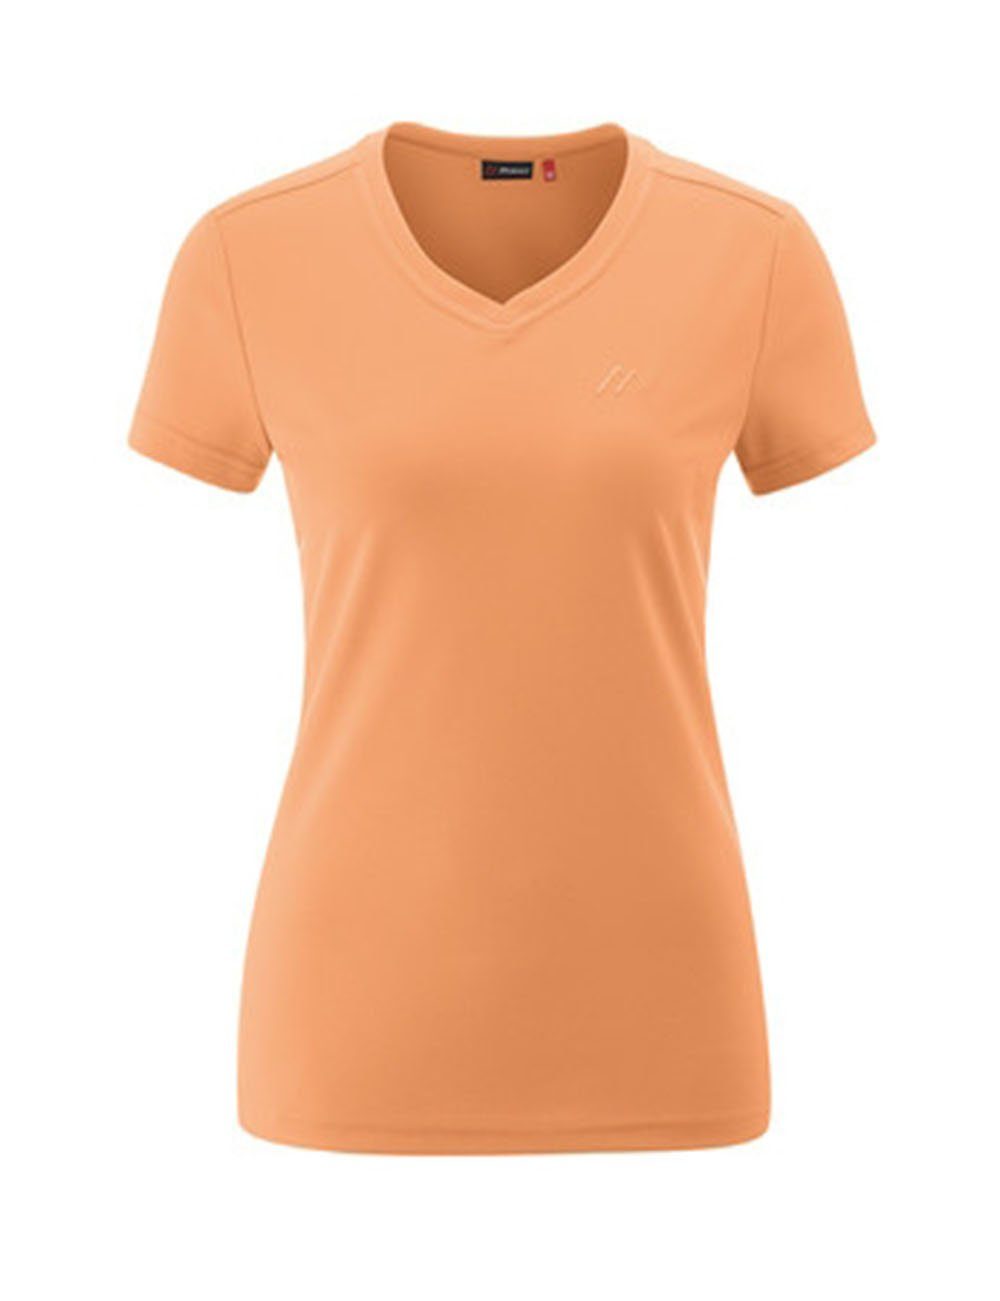 Maier Sports Laufshirt Maier Sports Da. T-Shirt Trudy 252310 orange